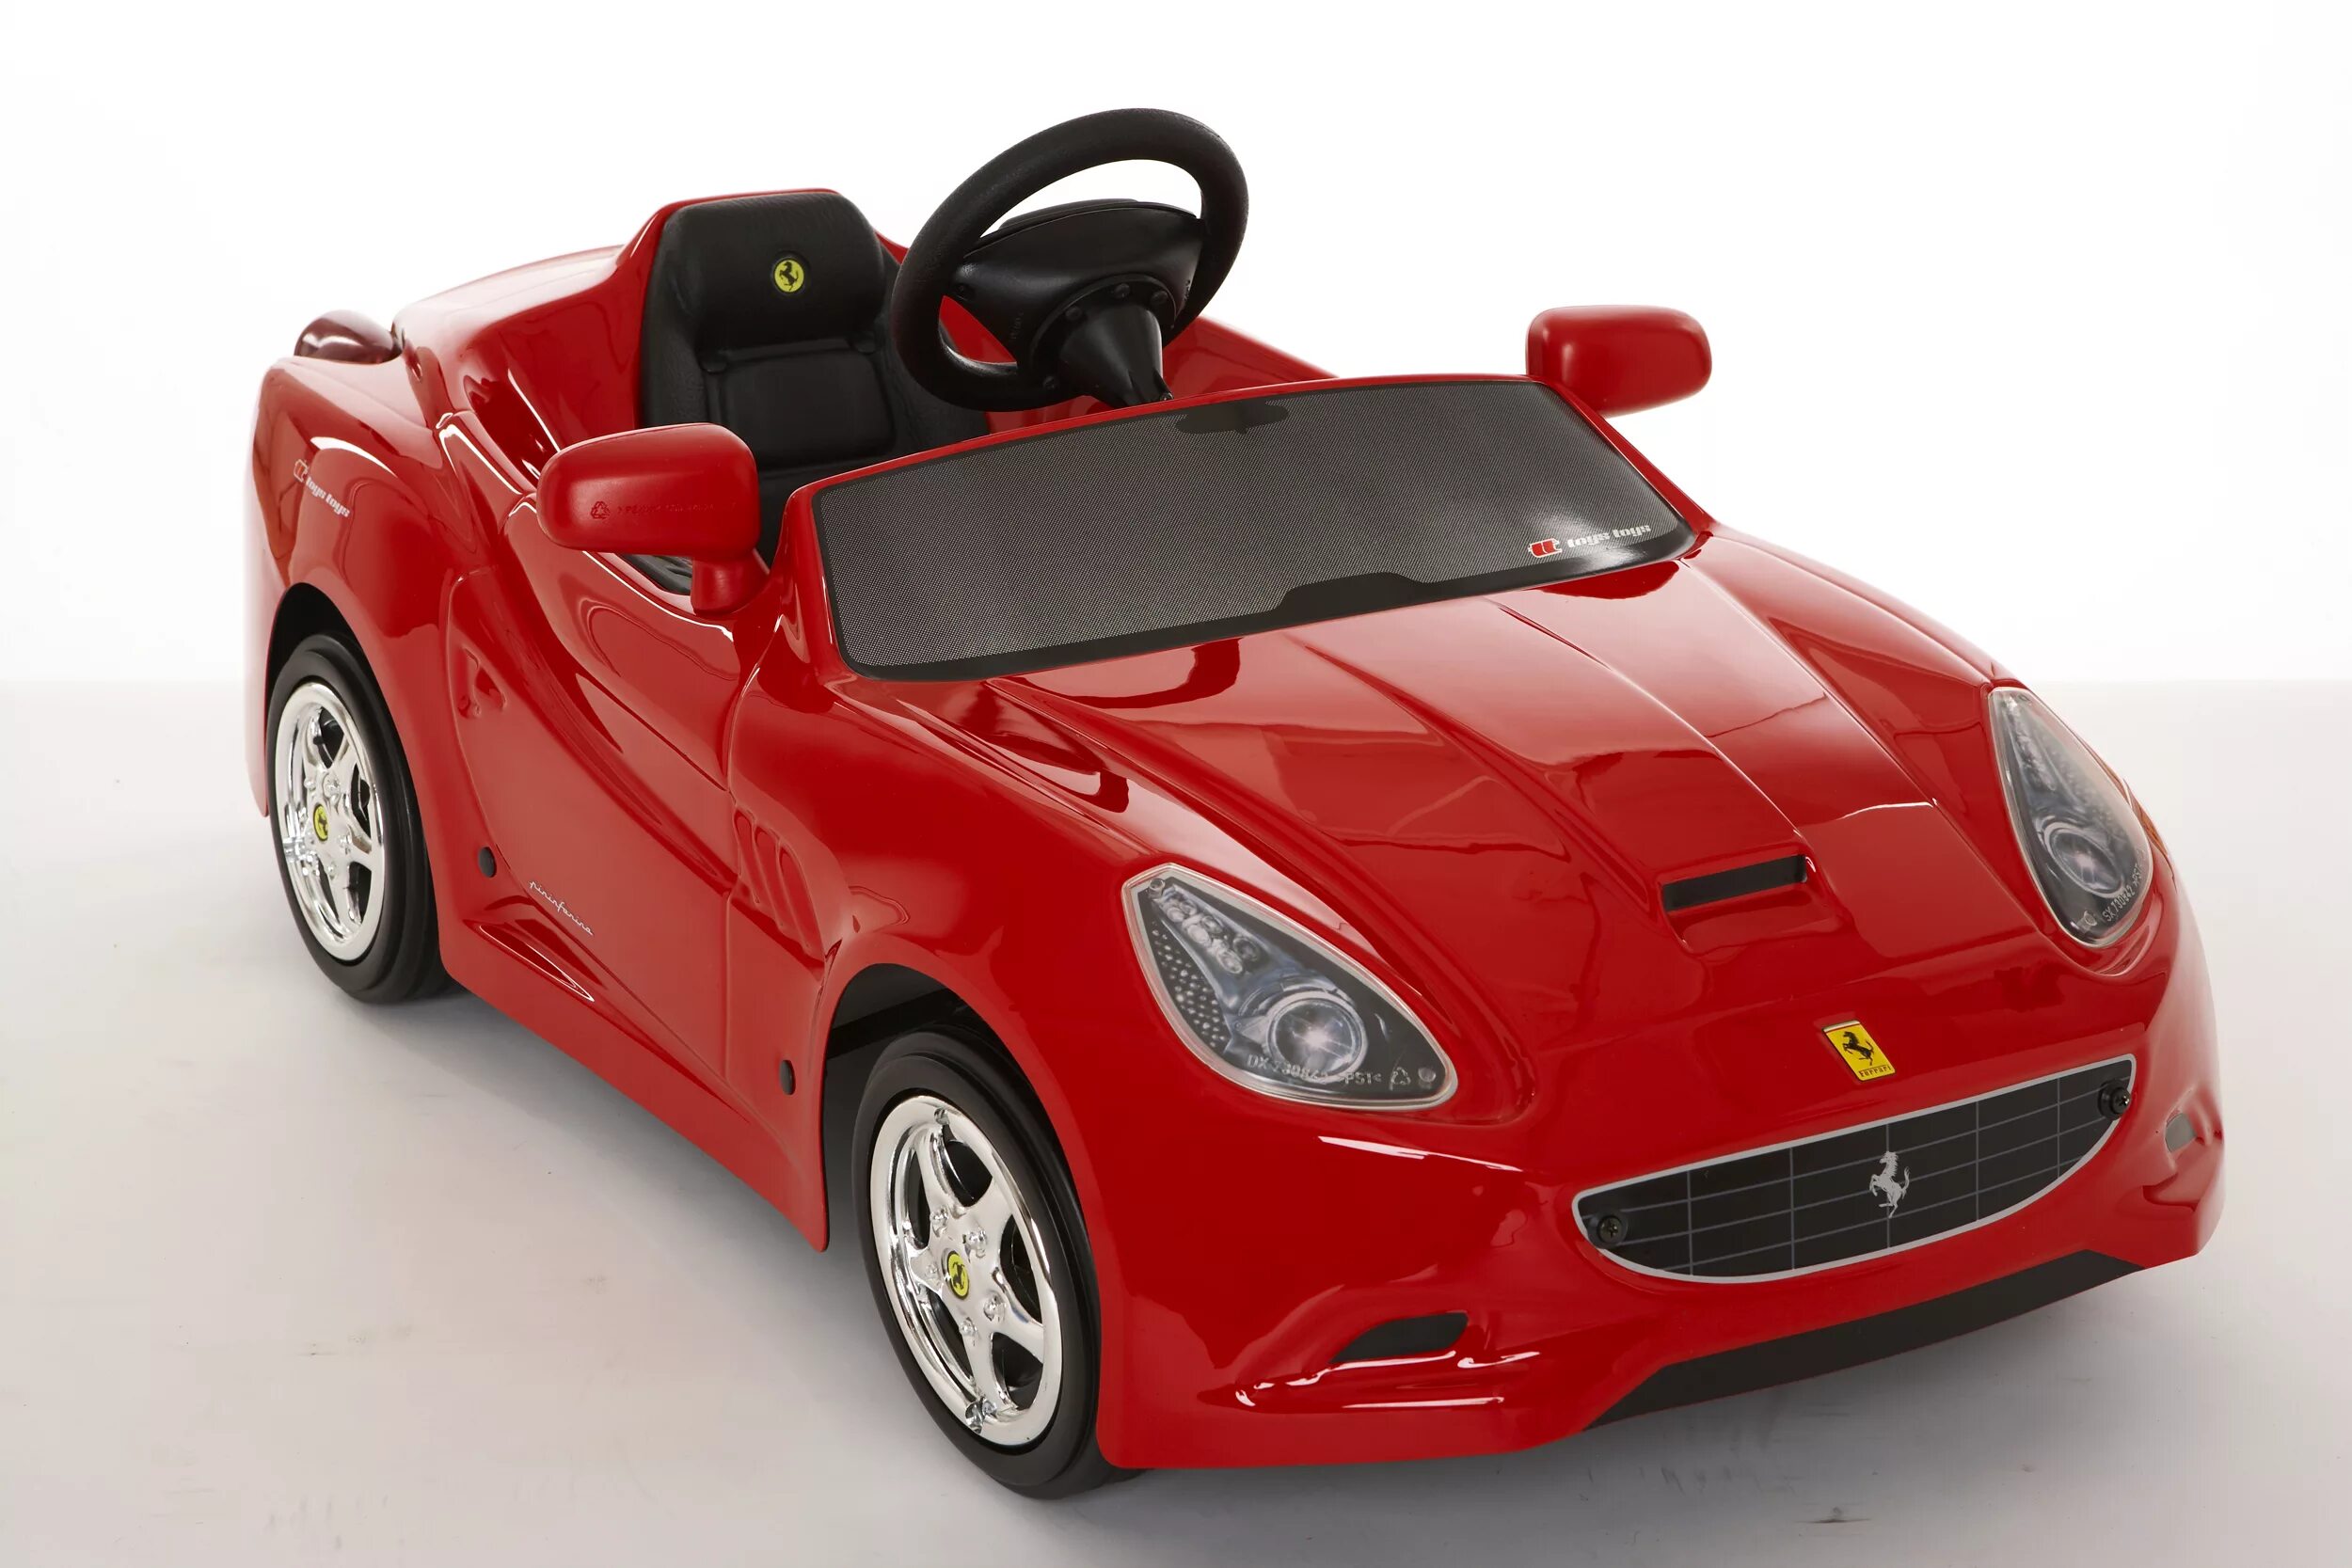 Toys toys машина. Детский электромобиль Ferrari f8. Электромобиль детский Ferrari 458. Детский Ferrari f8 XS электромобиль. Детский электромобиль Ferrari f8 двухместная.